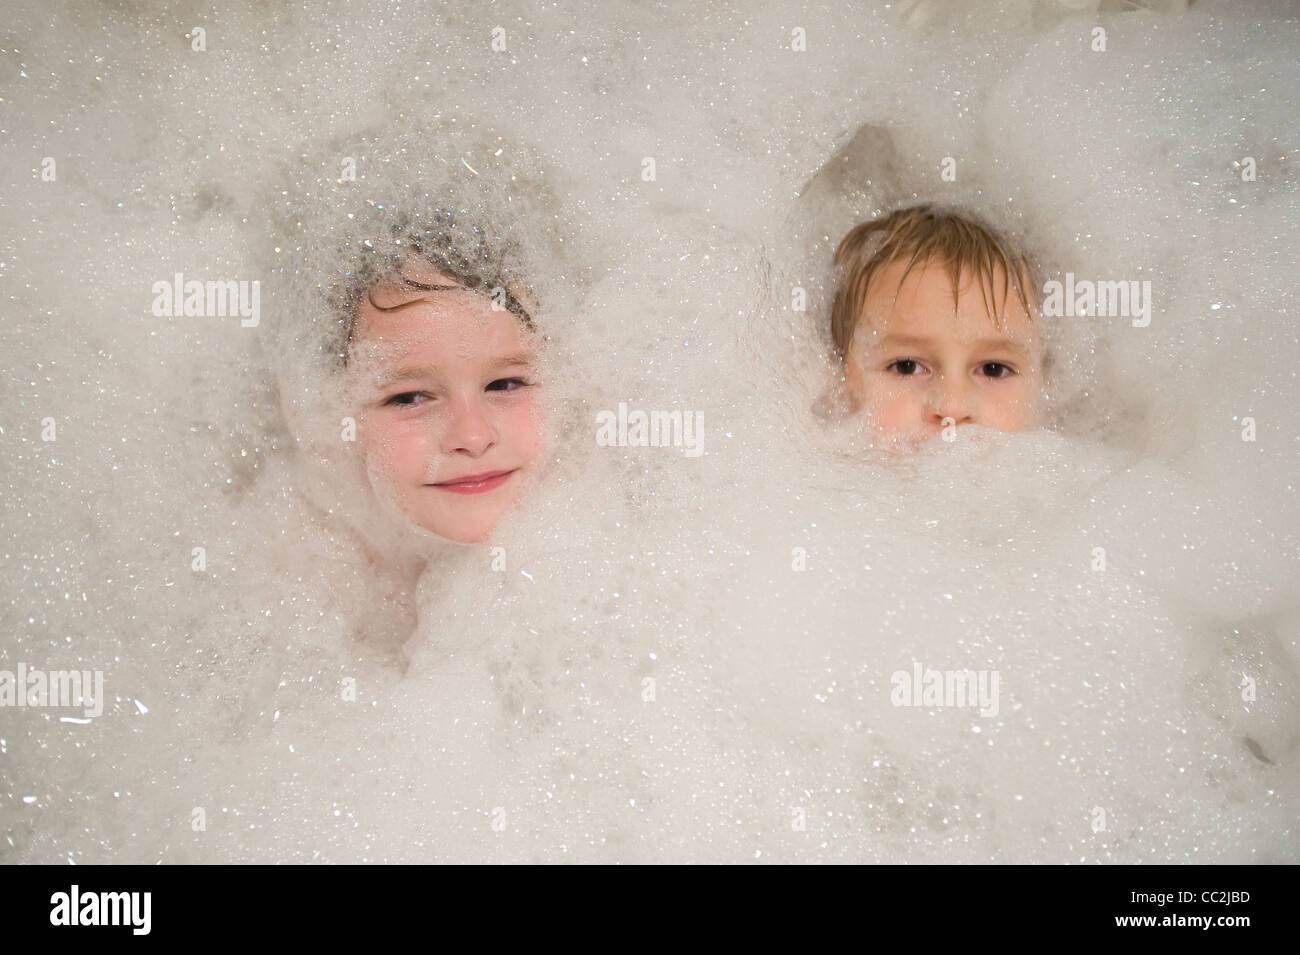 boys in foam bath Stock Photo